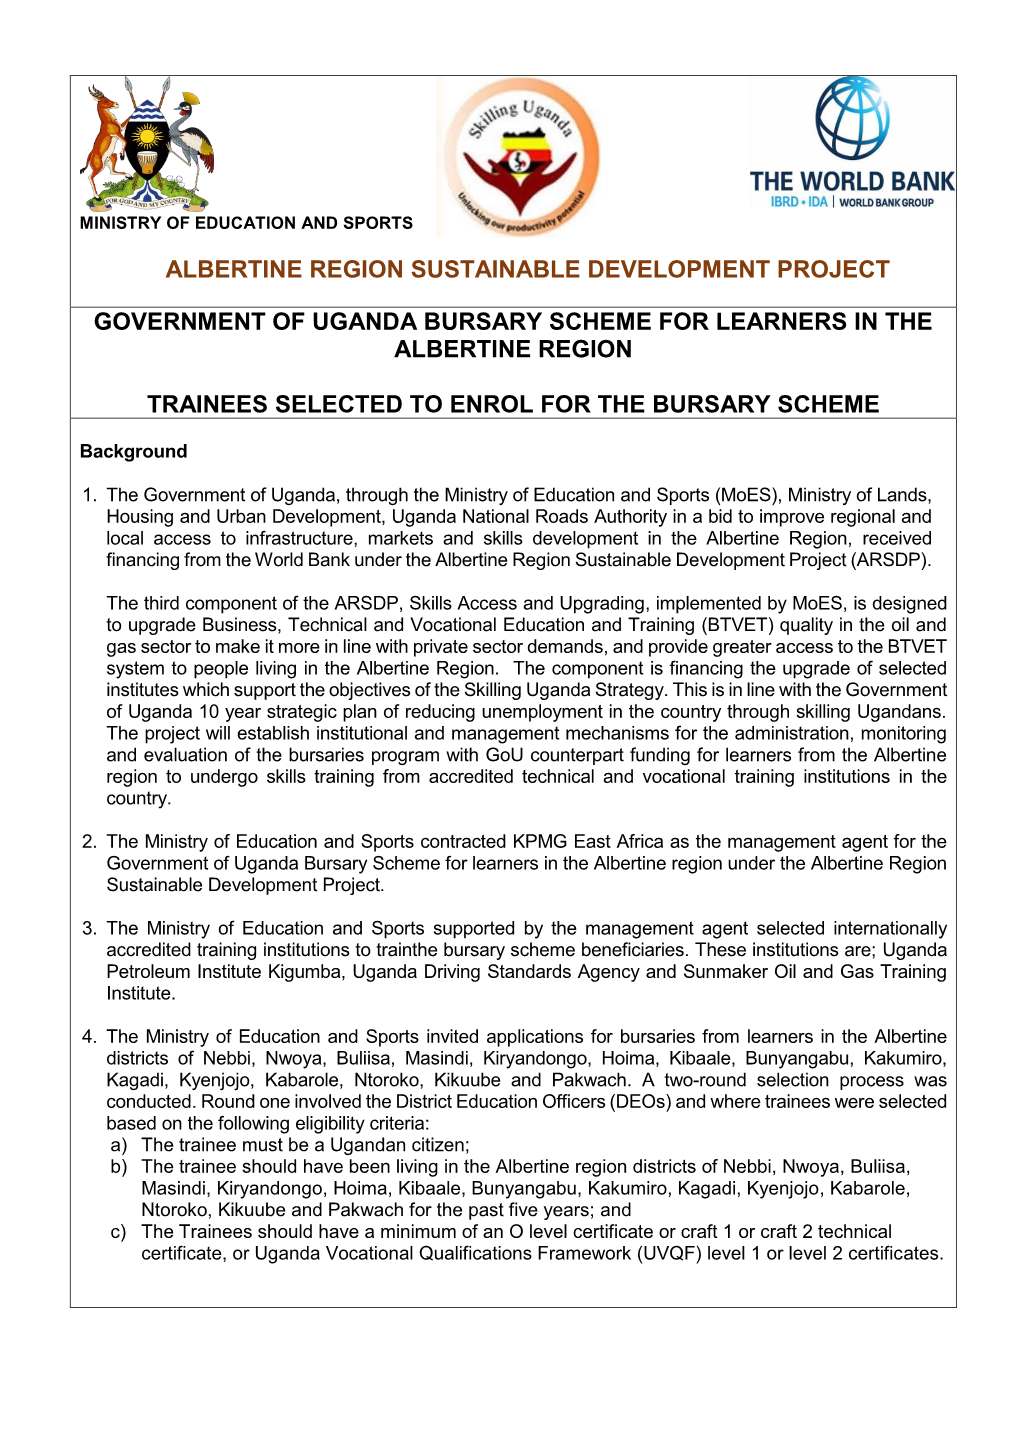 Government of Uganda Bursary Scheme for Learners in the Albertine Region